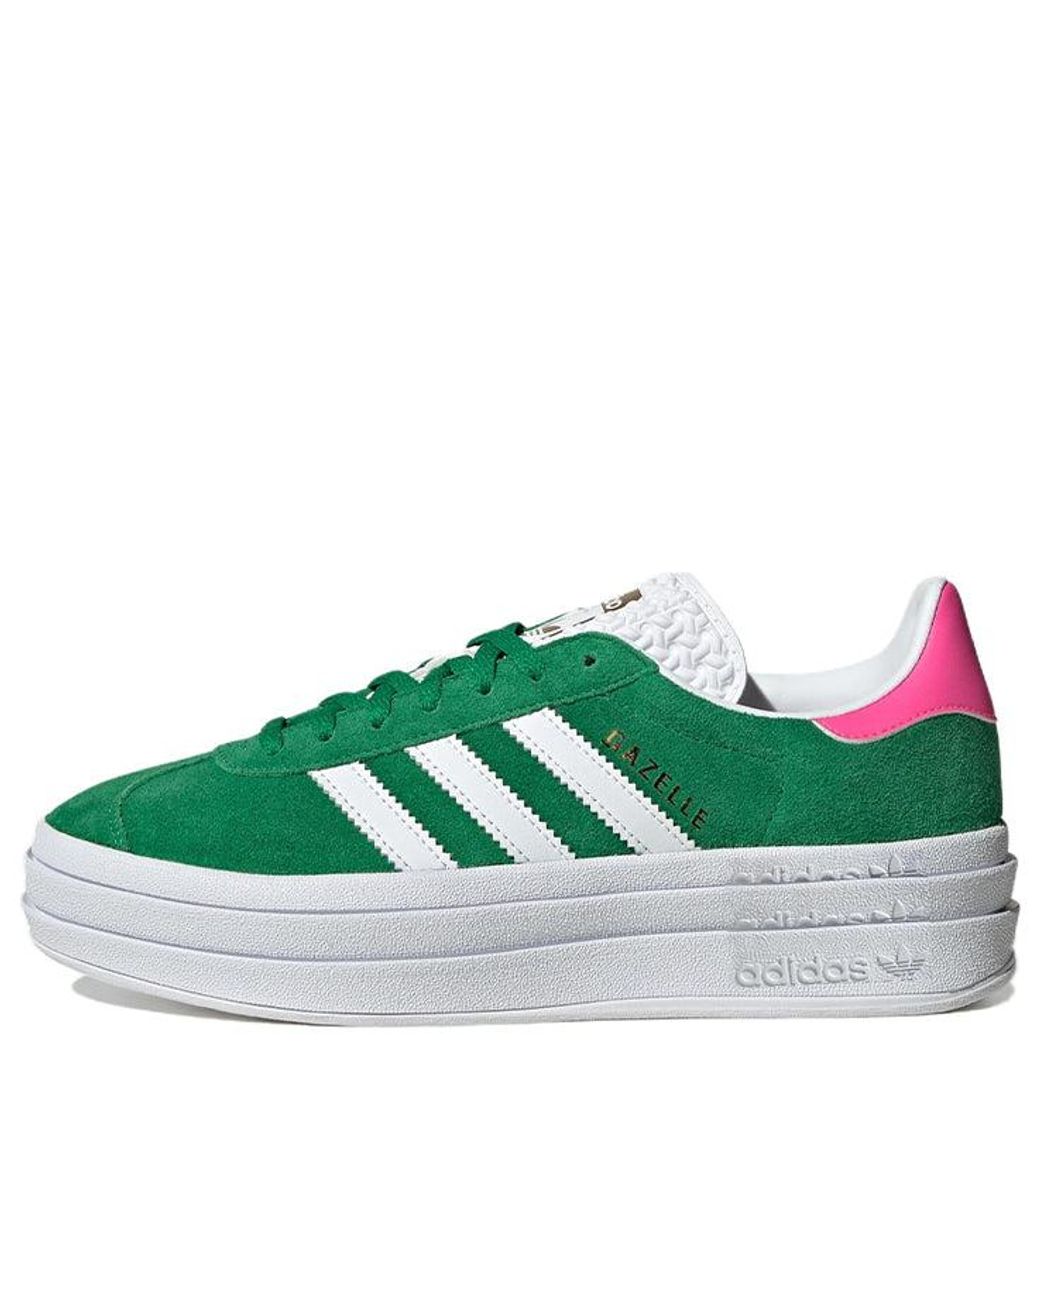 adidas Originals Gazelle Bold in Green | Lyst